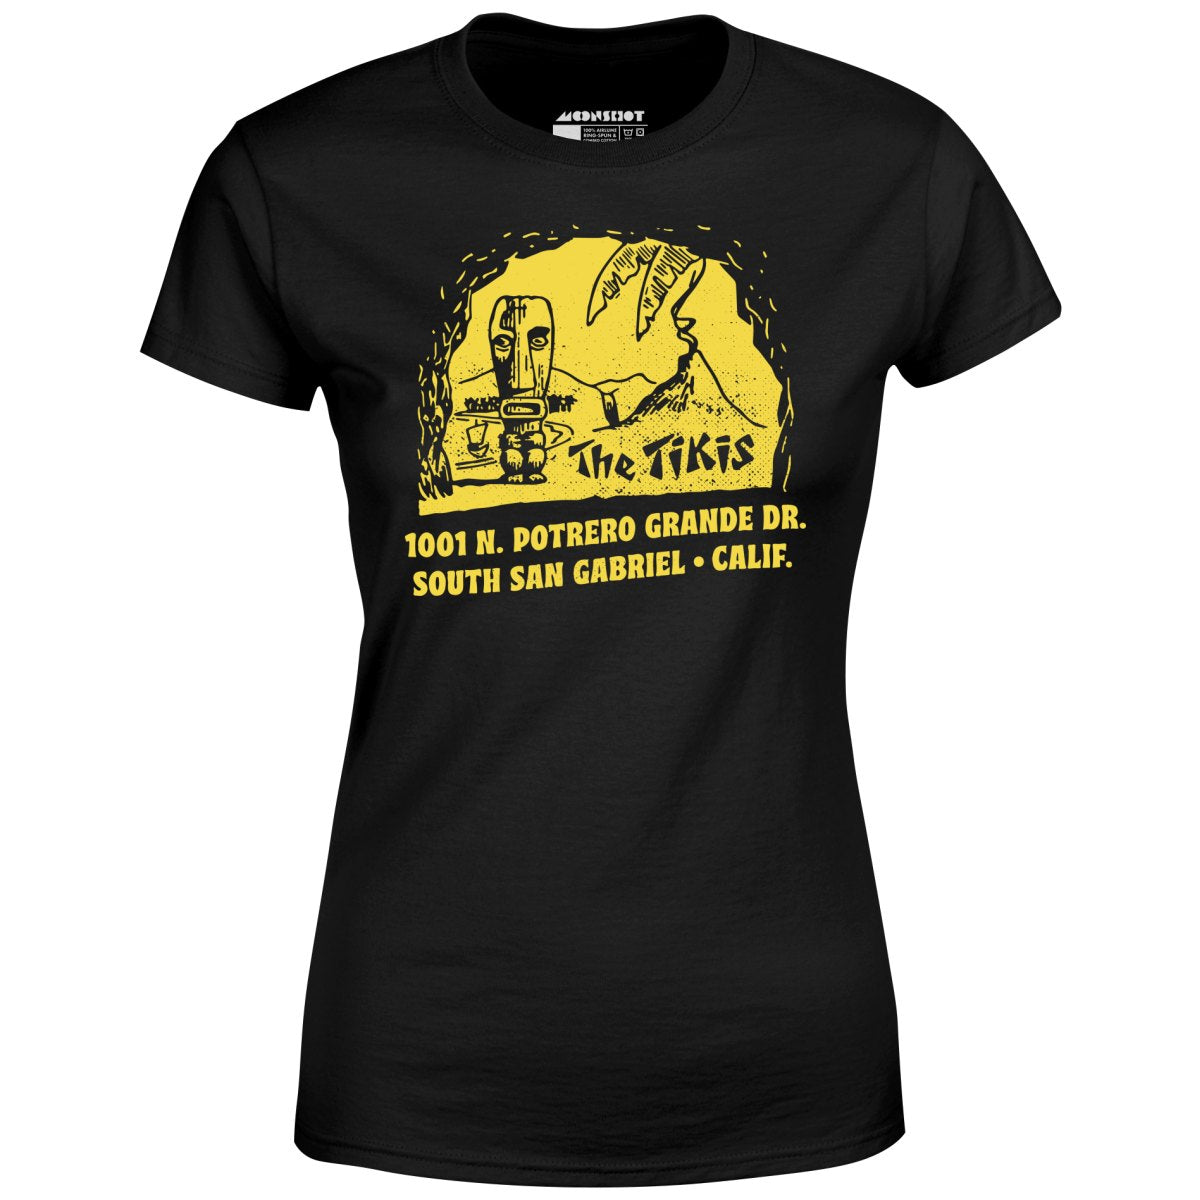 The Tikis - San Gabriel, CA - Vintage Tiki Bar - Women's T-Shirt